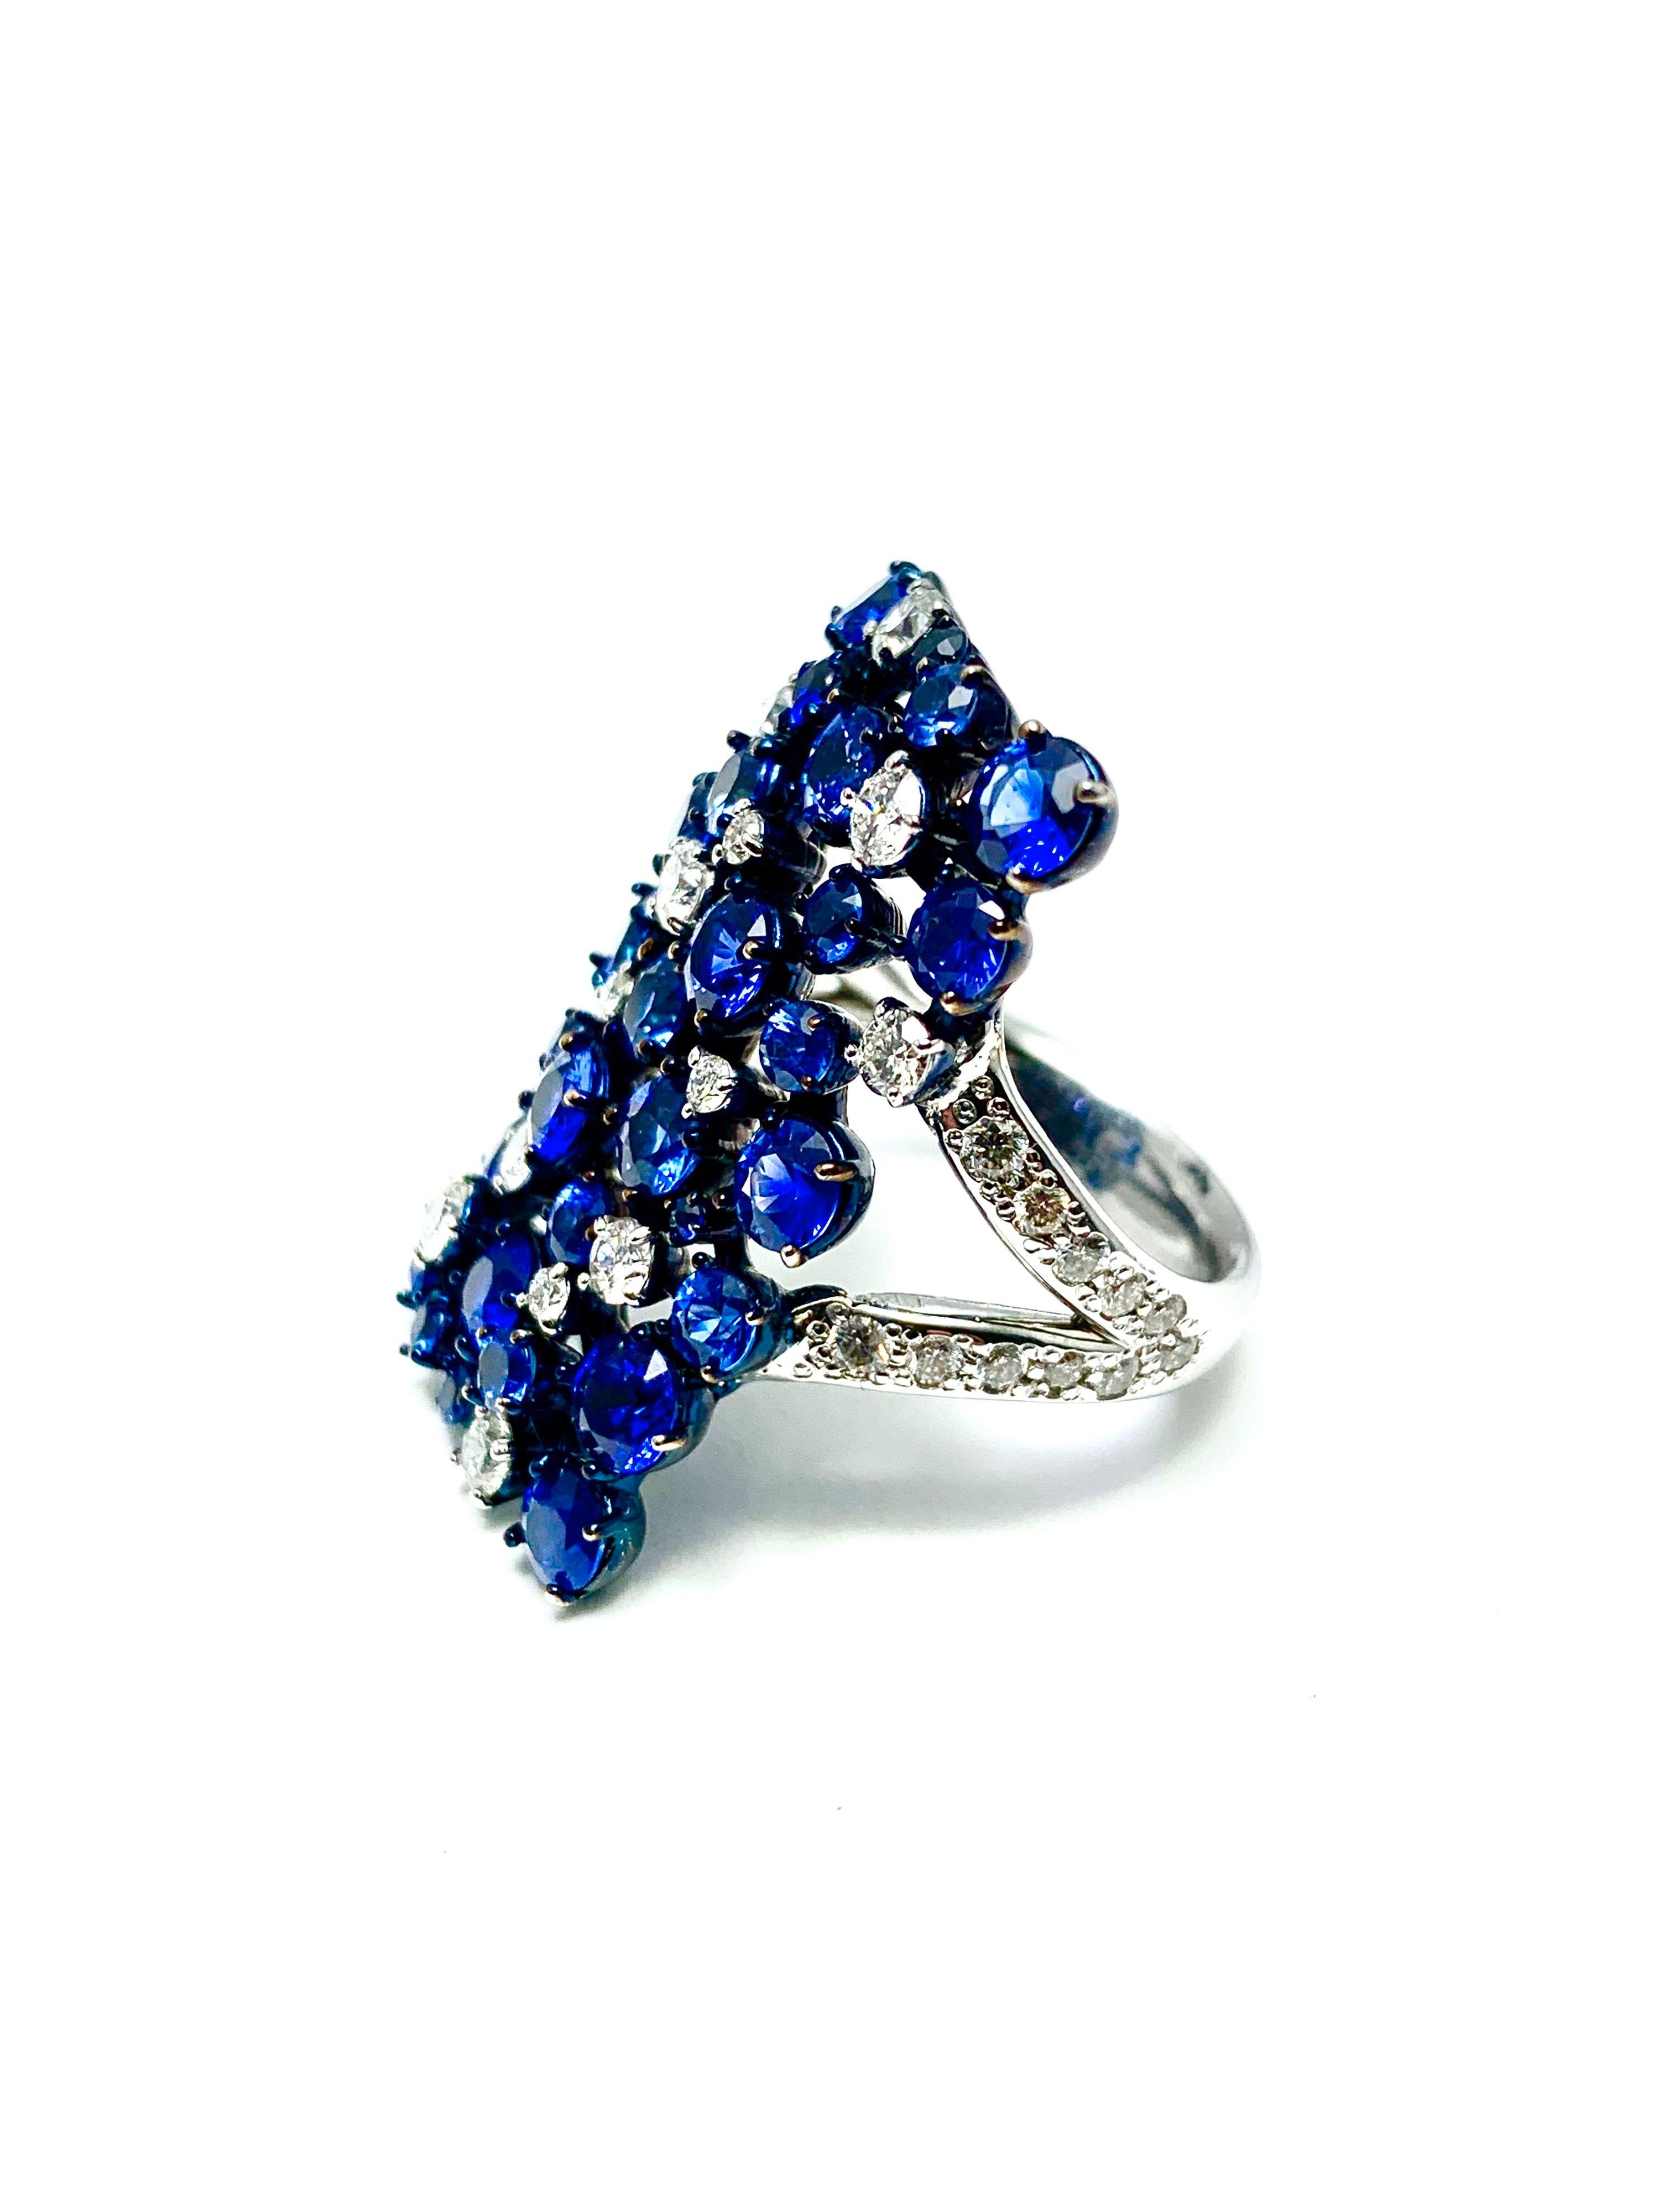 Mariani Manhattan Sapphire and Diamond Ring in 18 Karat Blue and White Gold 1